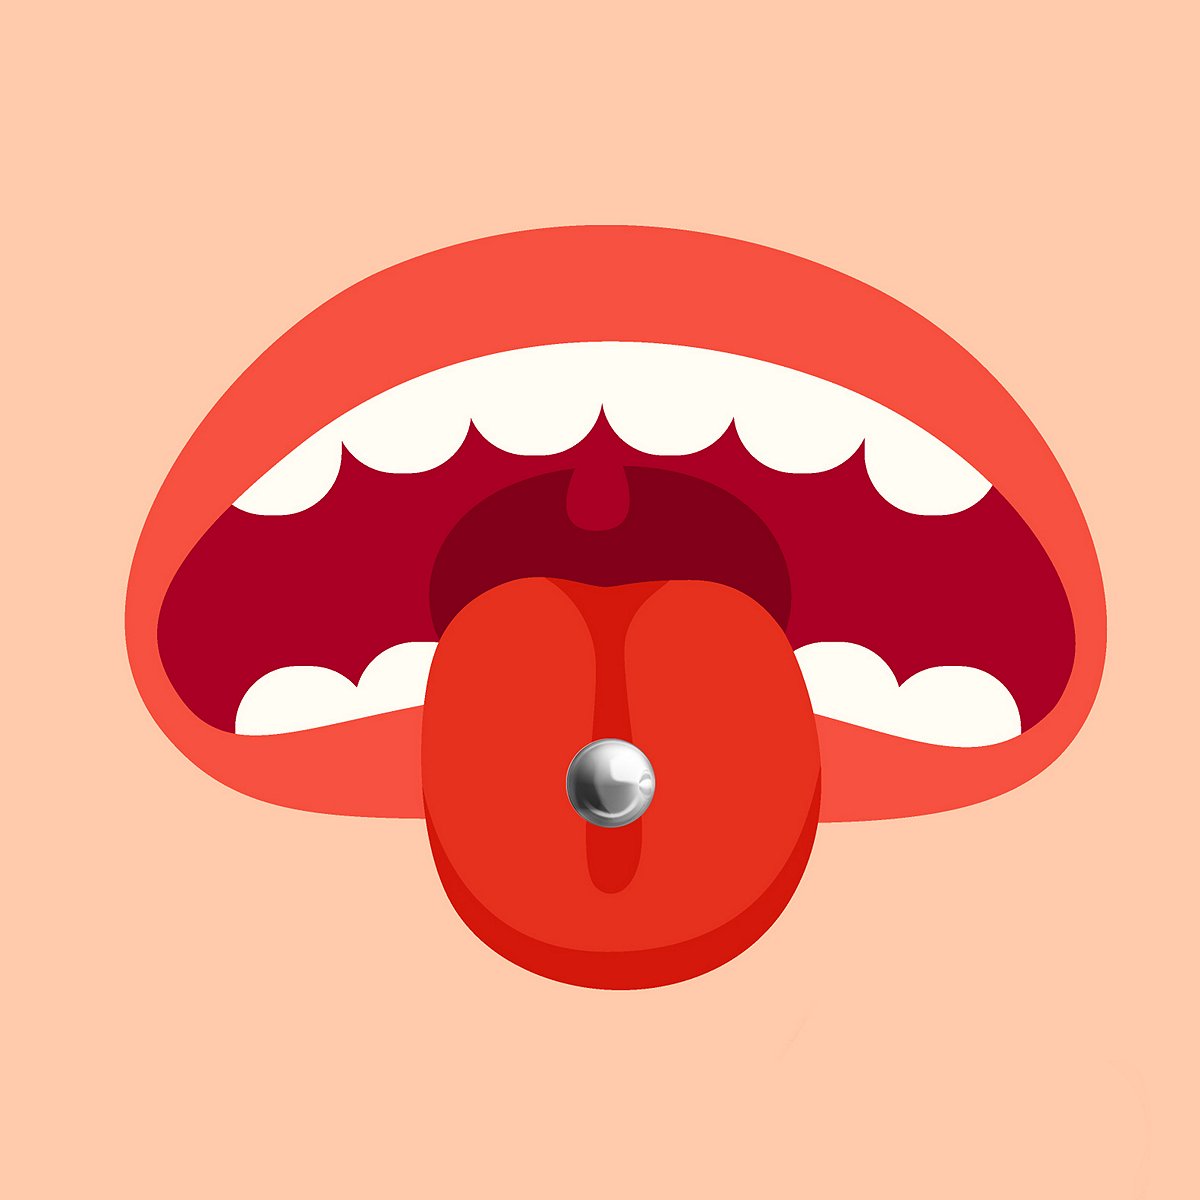 midline tongue piercing